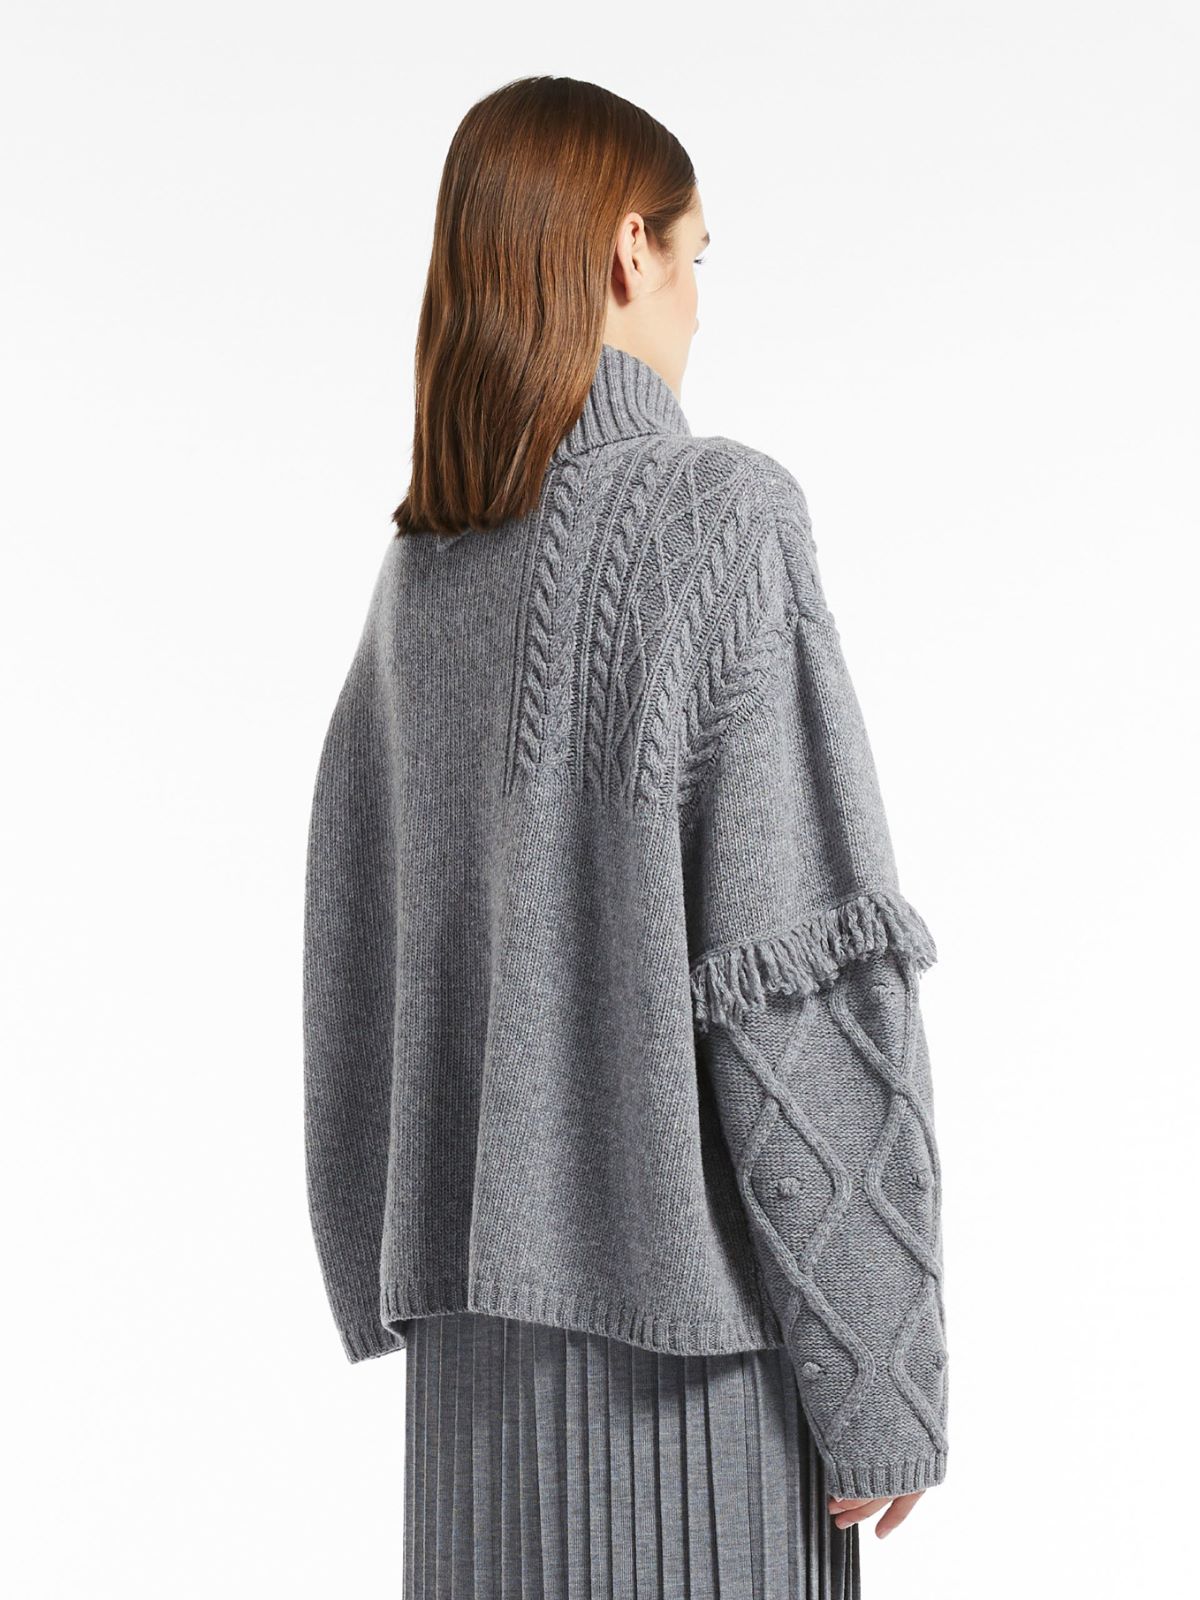 Carded wool sweater - MEDIUM GREY - Weekend Max Mara - 3